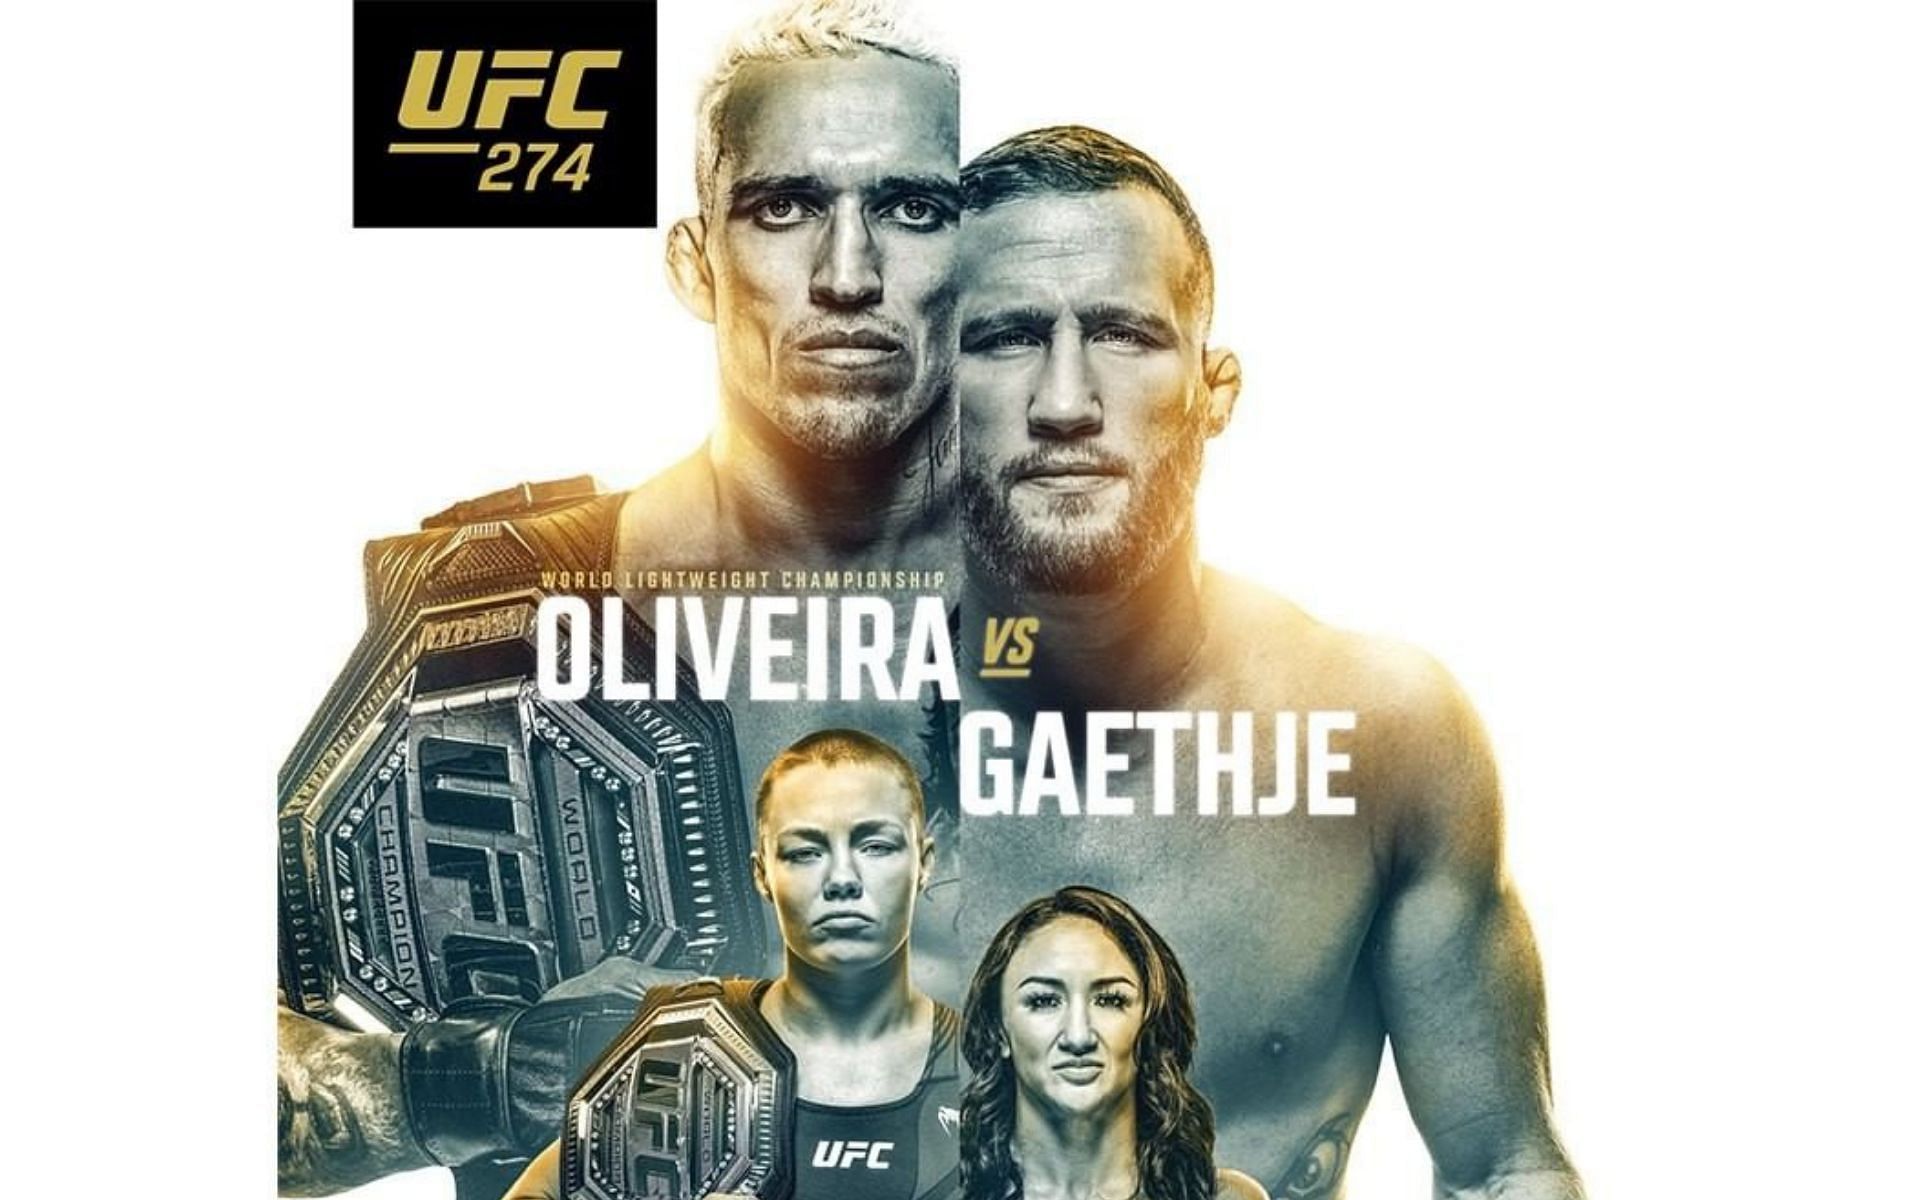 UFC 274 poster [Image courtesy of @ufc Instagram]